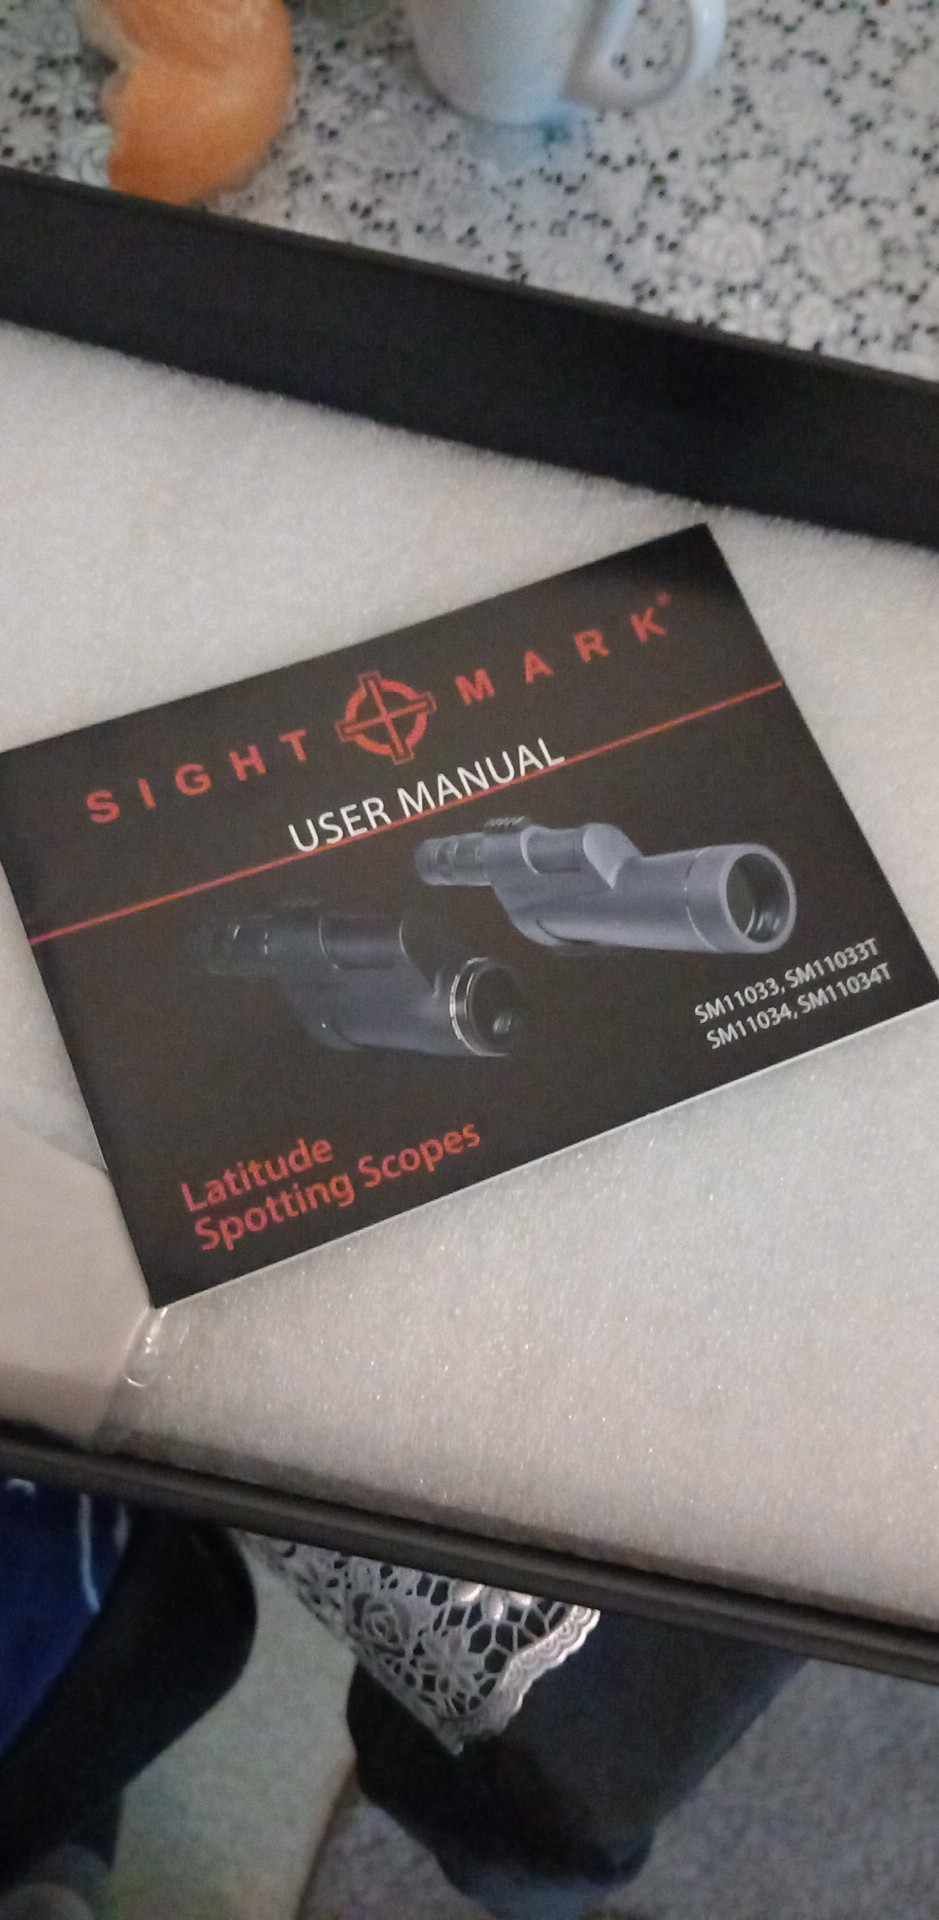 Sight mark user manual latitude spotting scopes